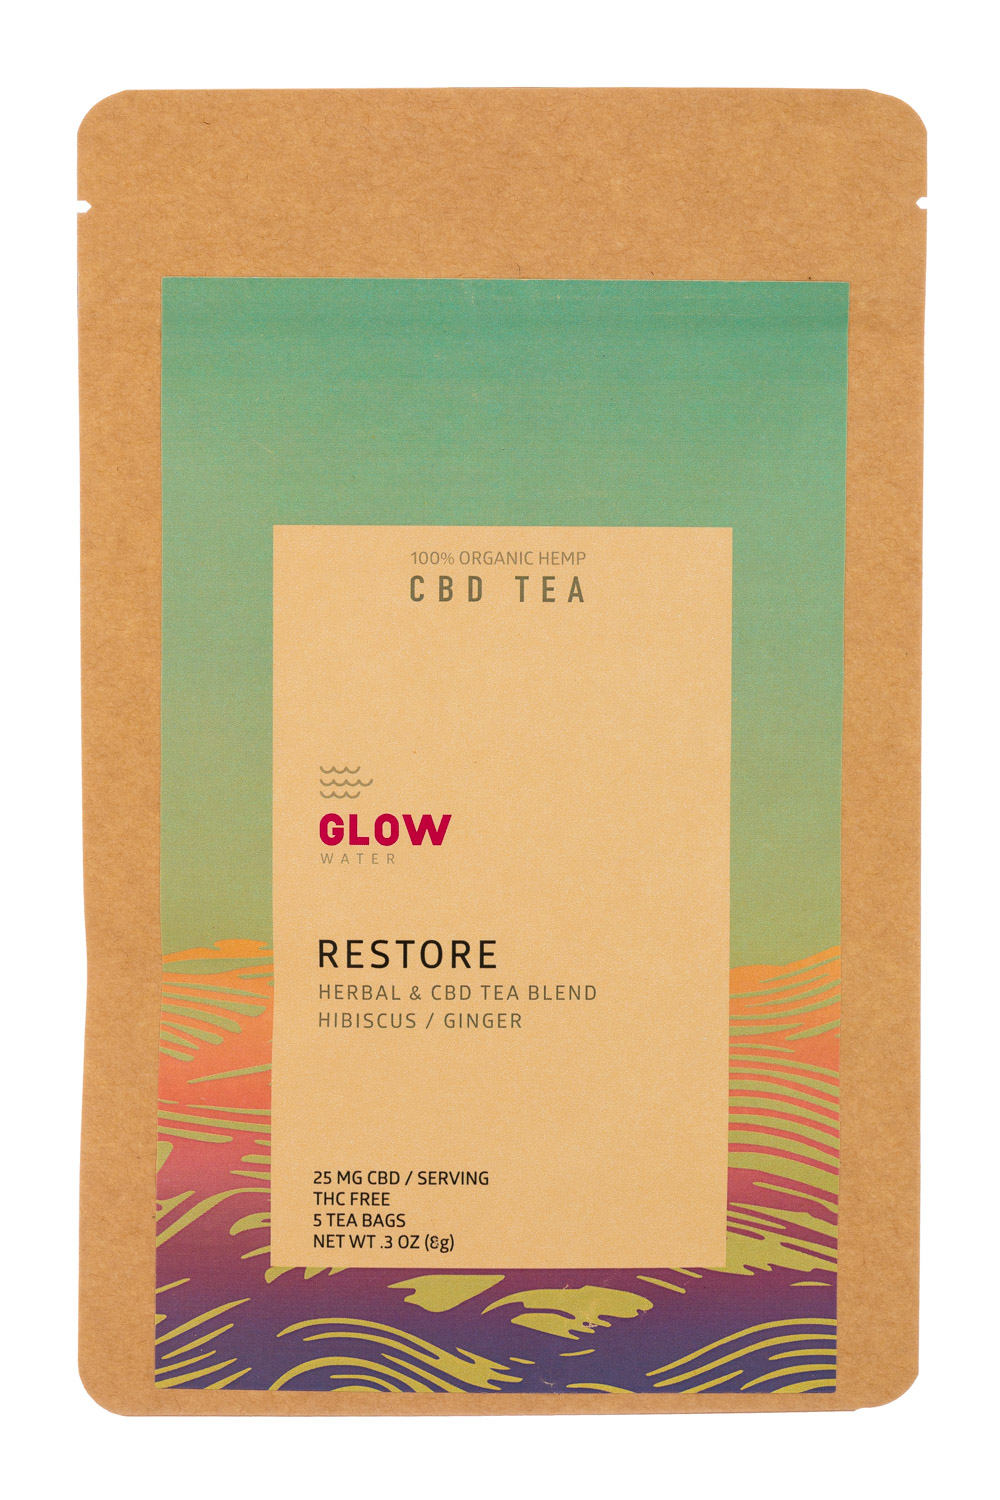 RESTORE Glow Water CBD Tea (5 tea bags)